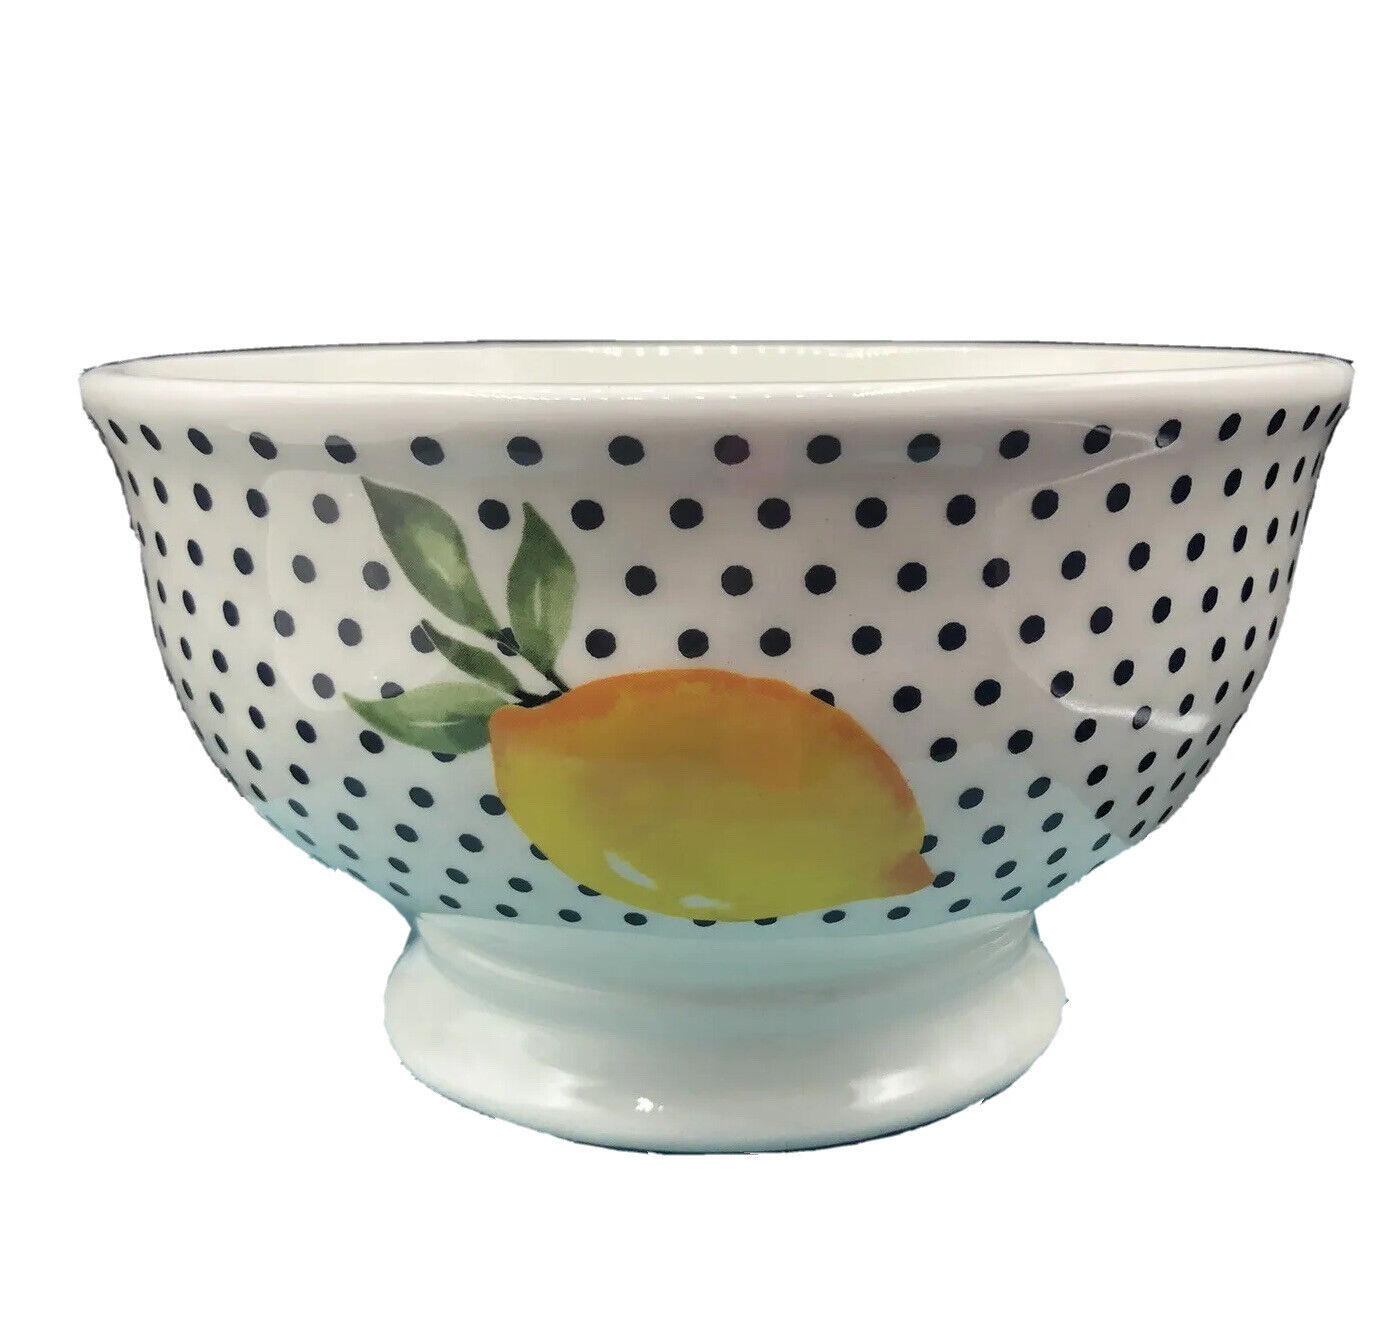 Adorable Large Ceramic Cypress Bowl Lemon And Black Polkadots￼ #3 Fun